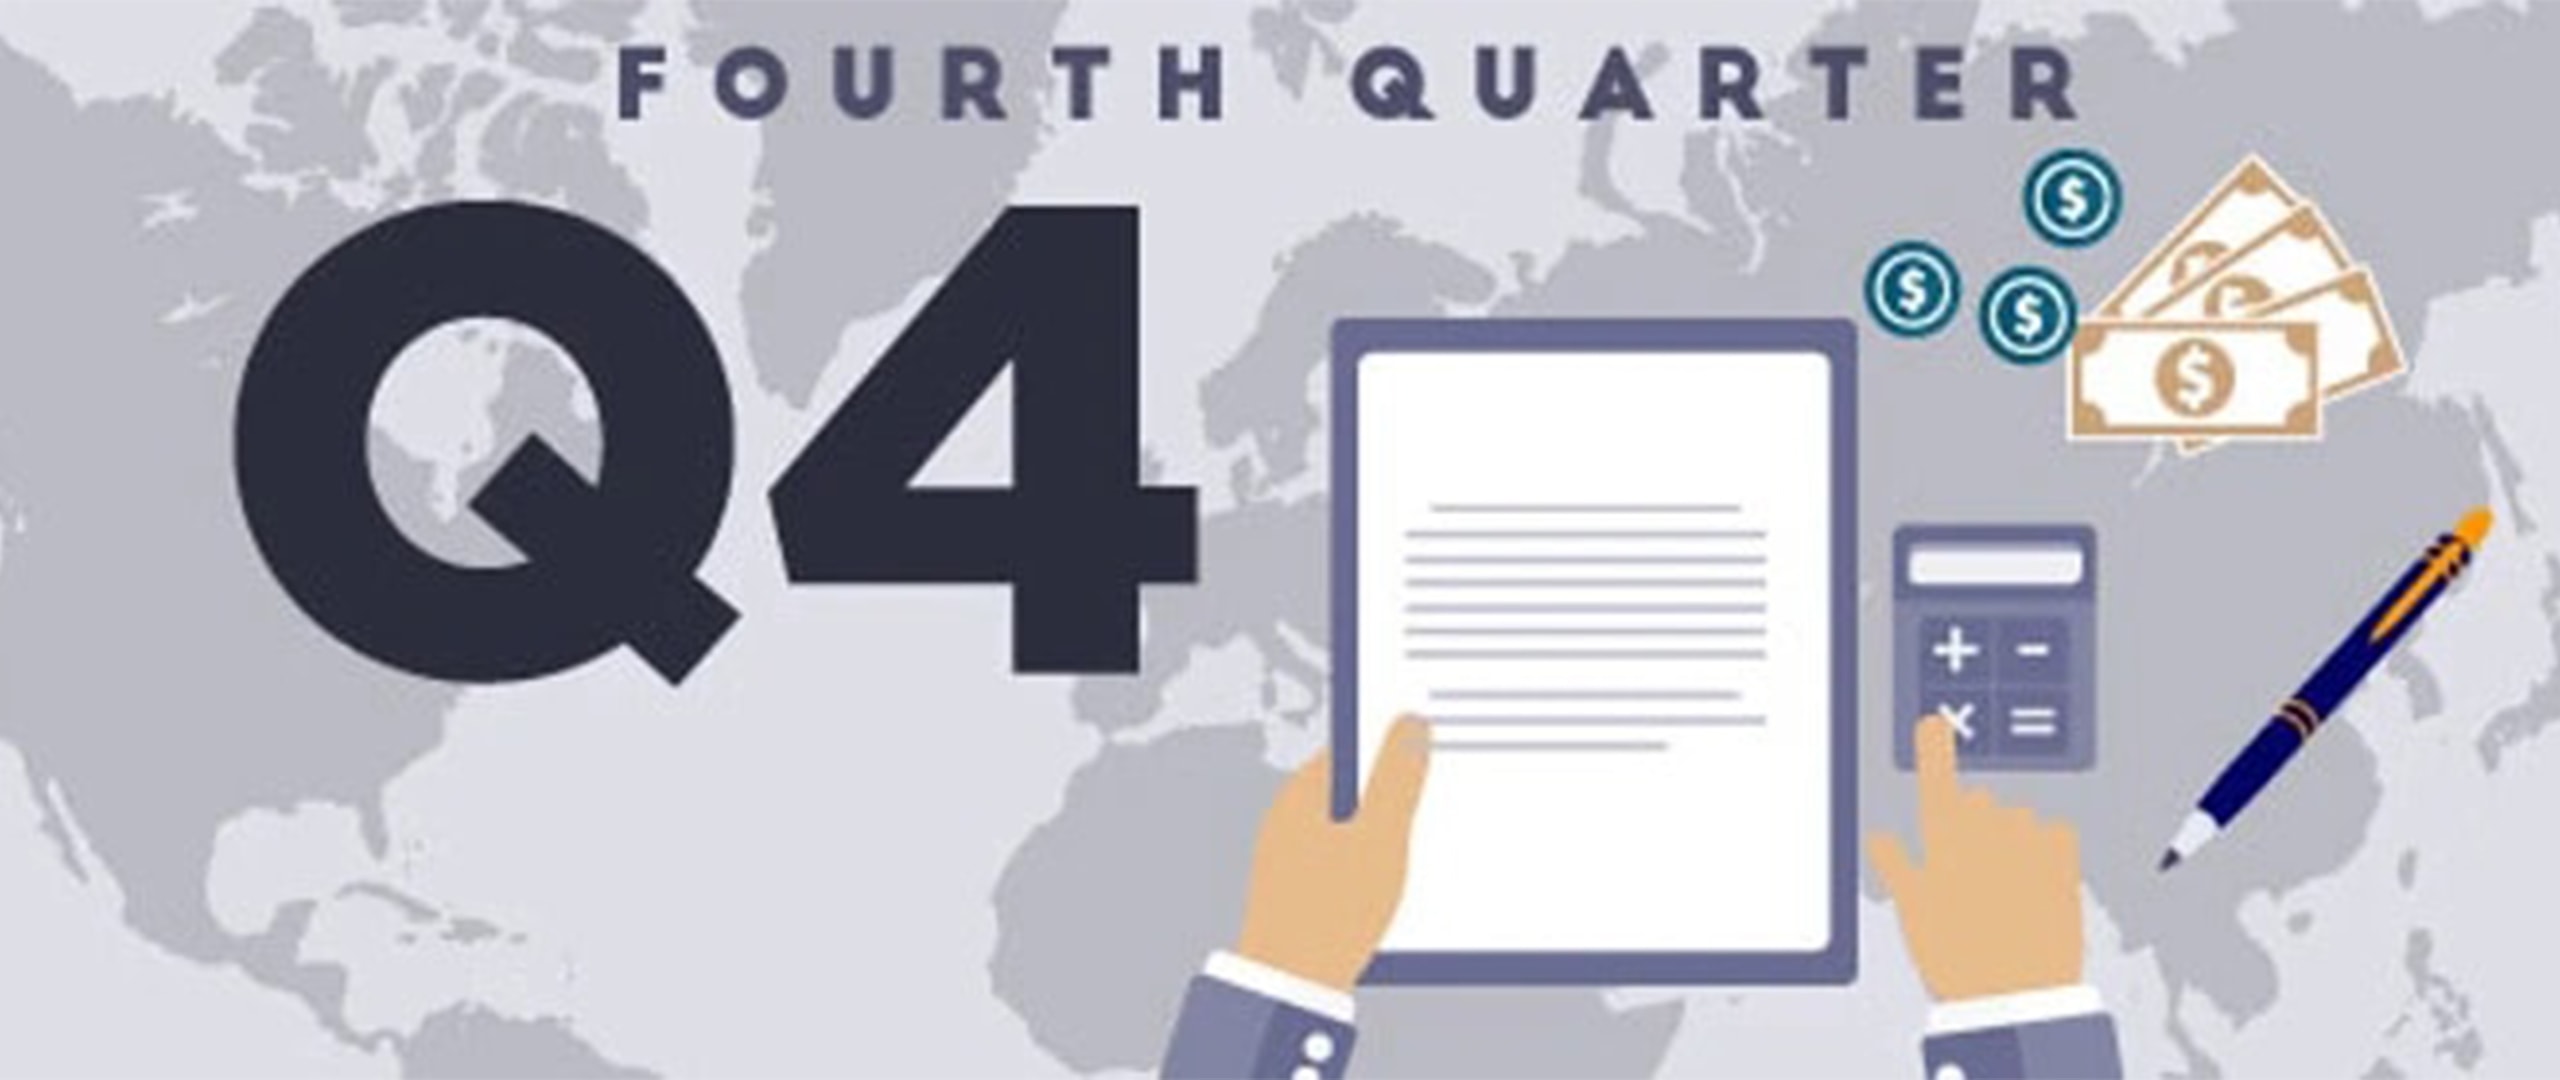 Fourth Quarter Q4 banner